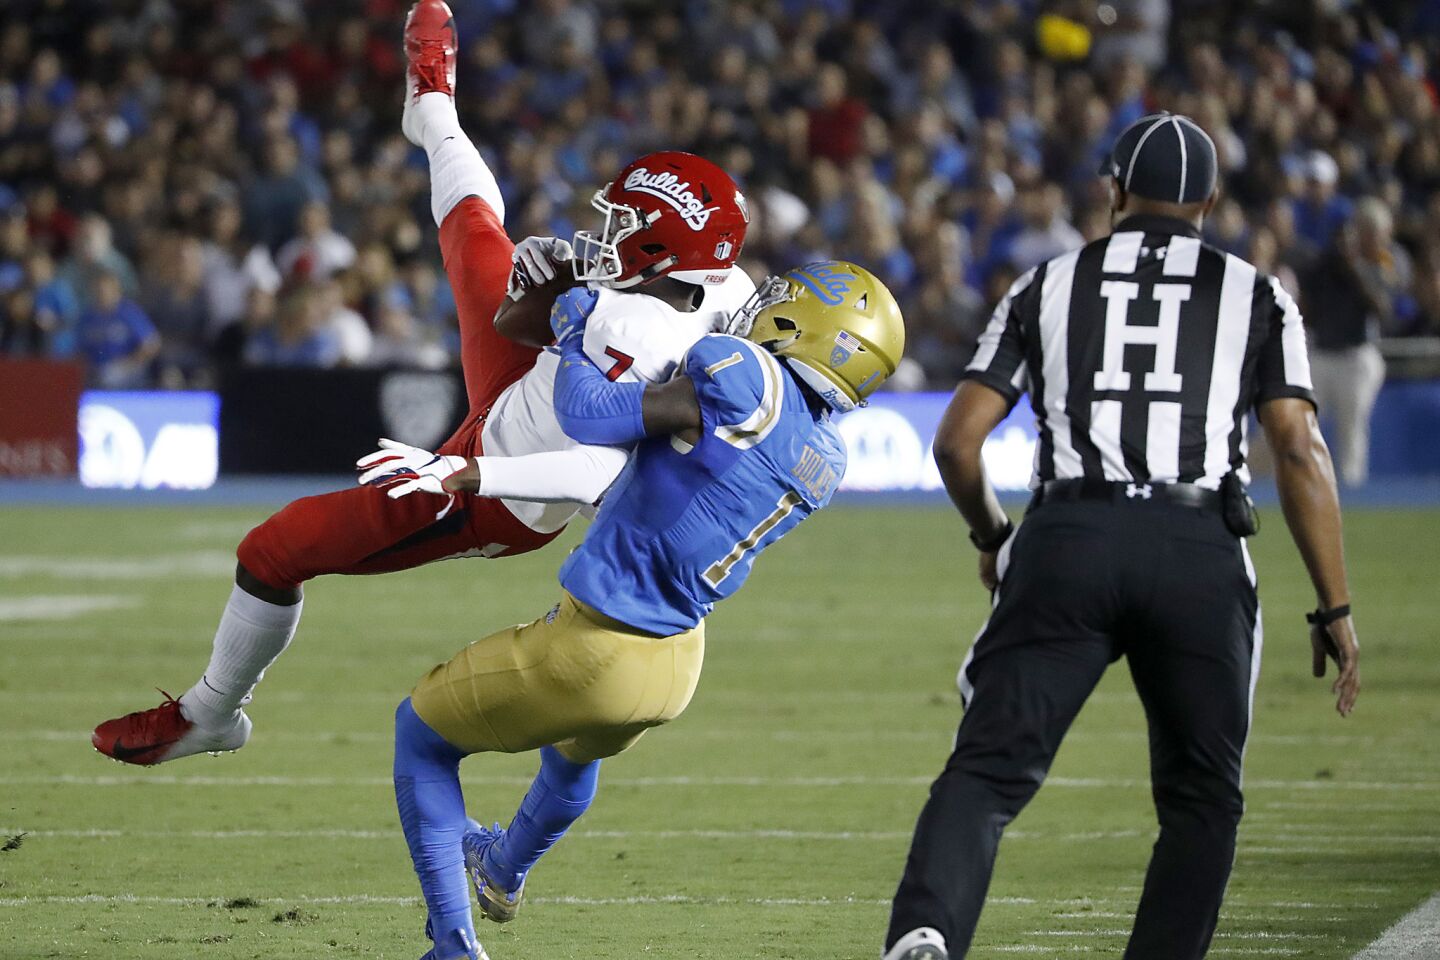 UCLA cornerback Darnay Holmes brings down Fresno State wide receiver Derrior Grim in the first quarter on Saturday.